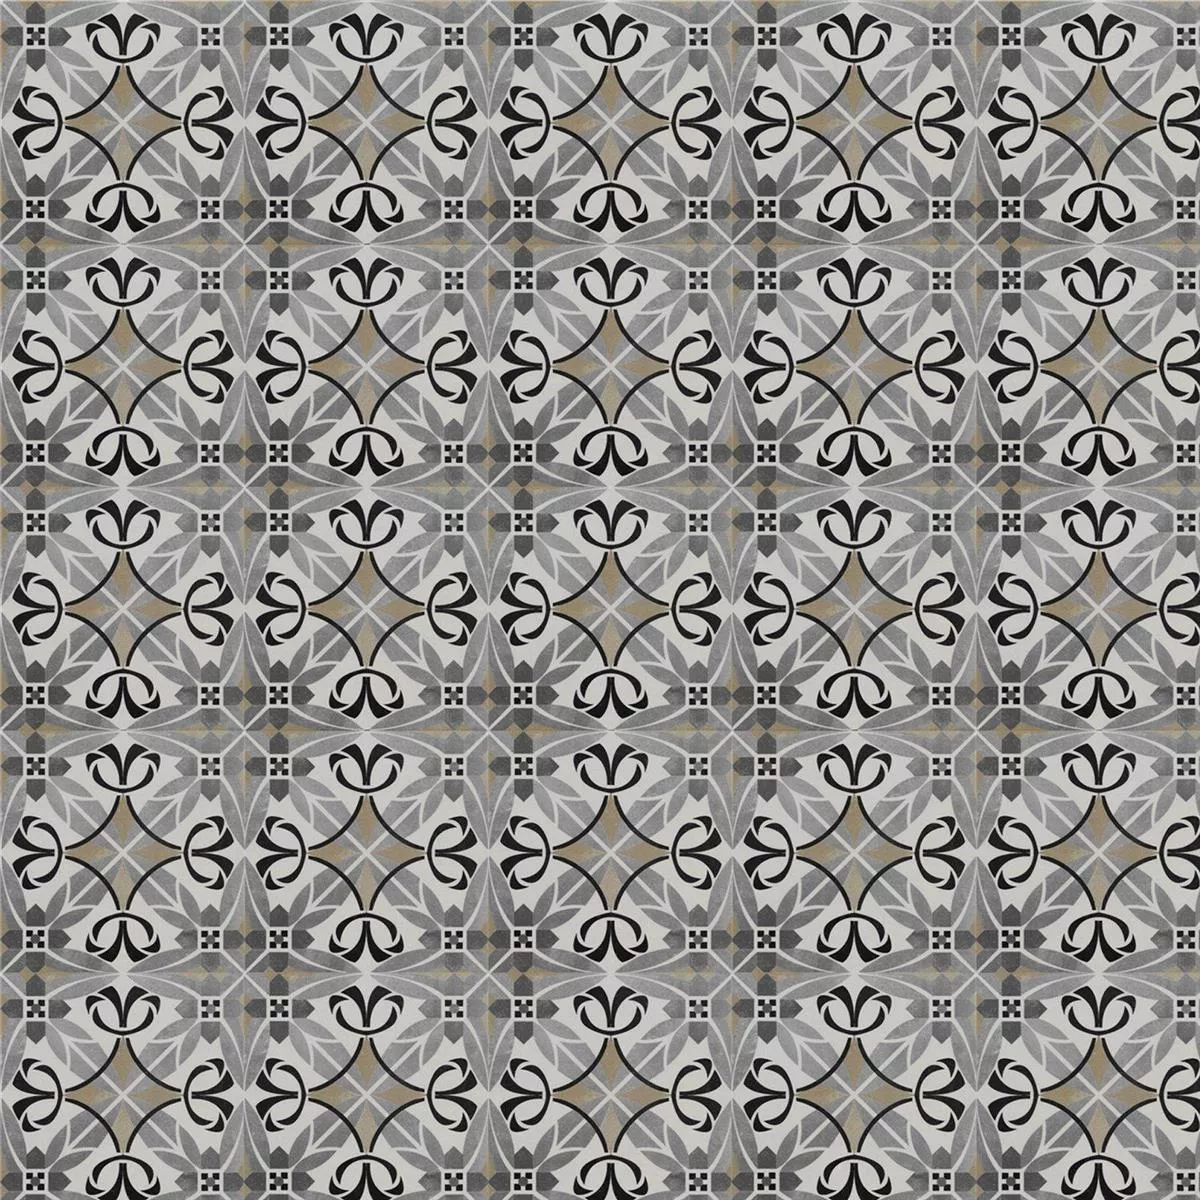 Vzorek Vzhled Cementové Dlaždice Gotik Gemma 22,3x22,3cm